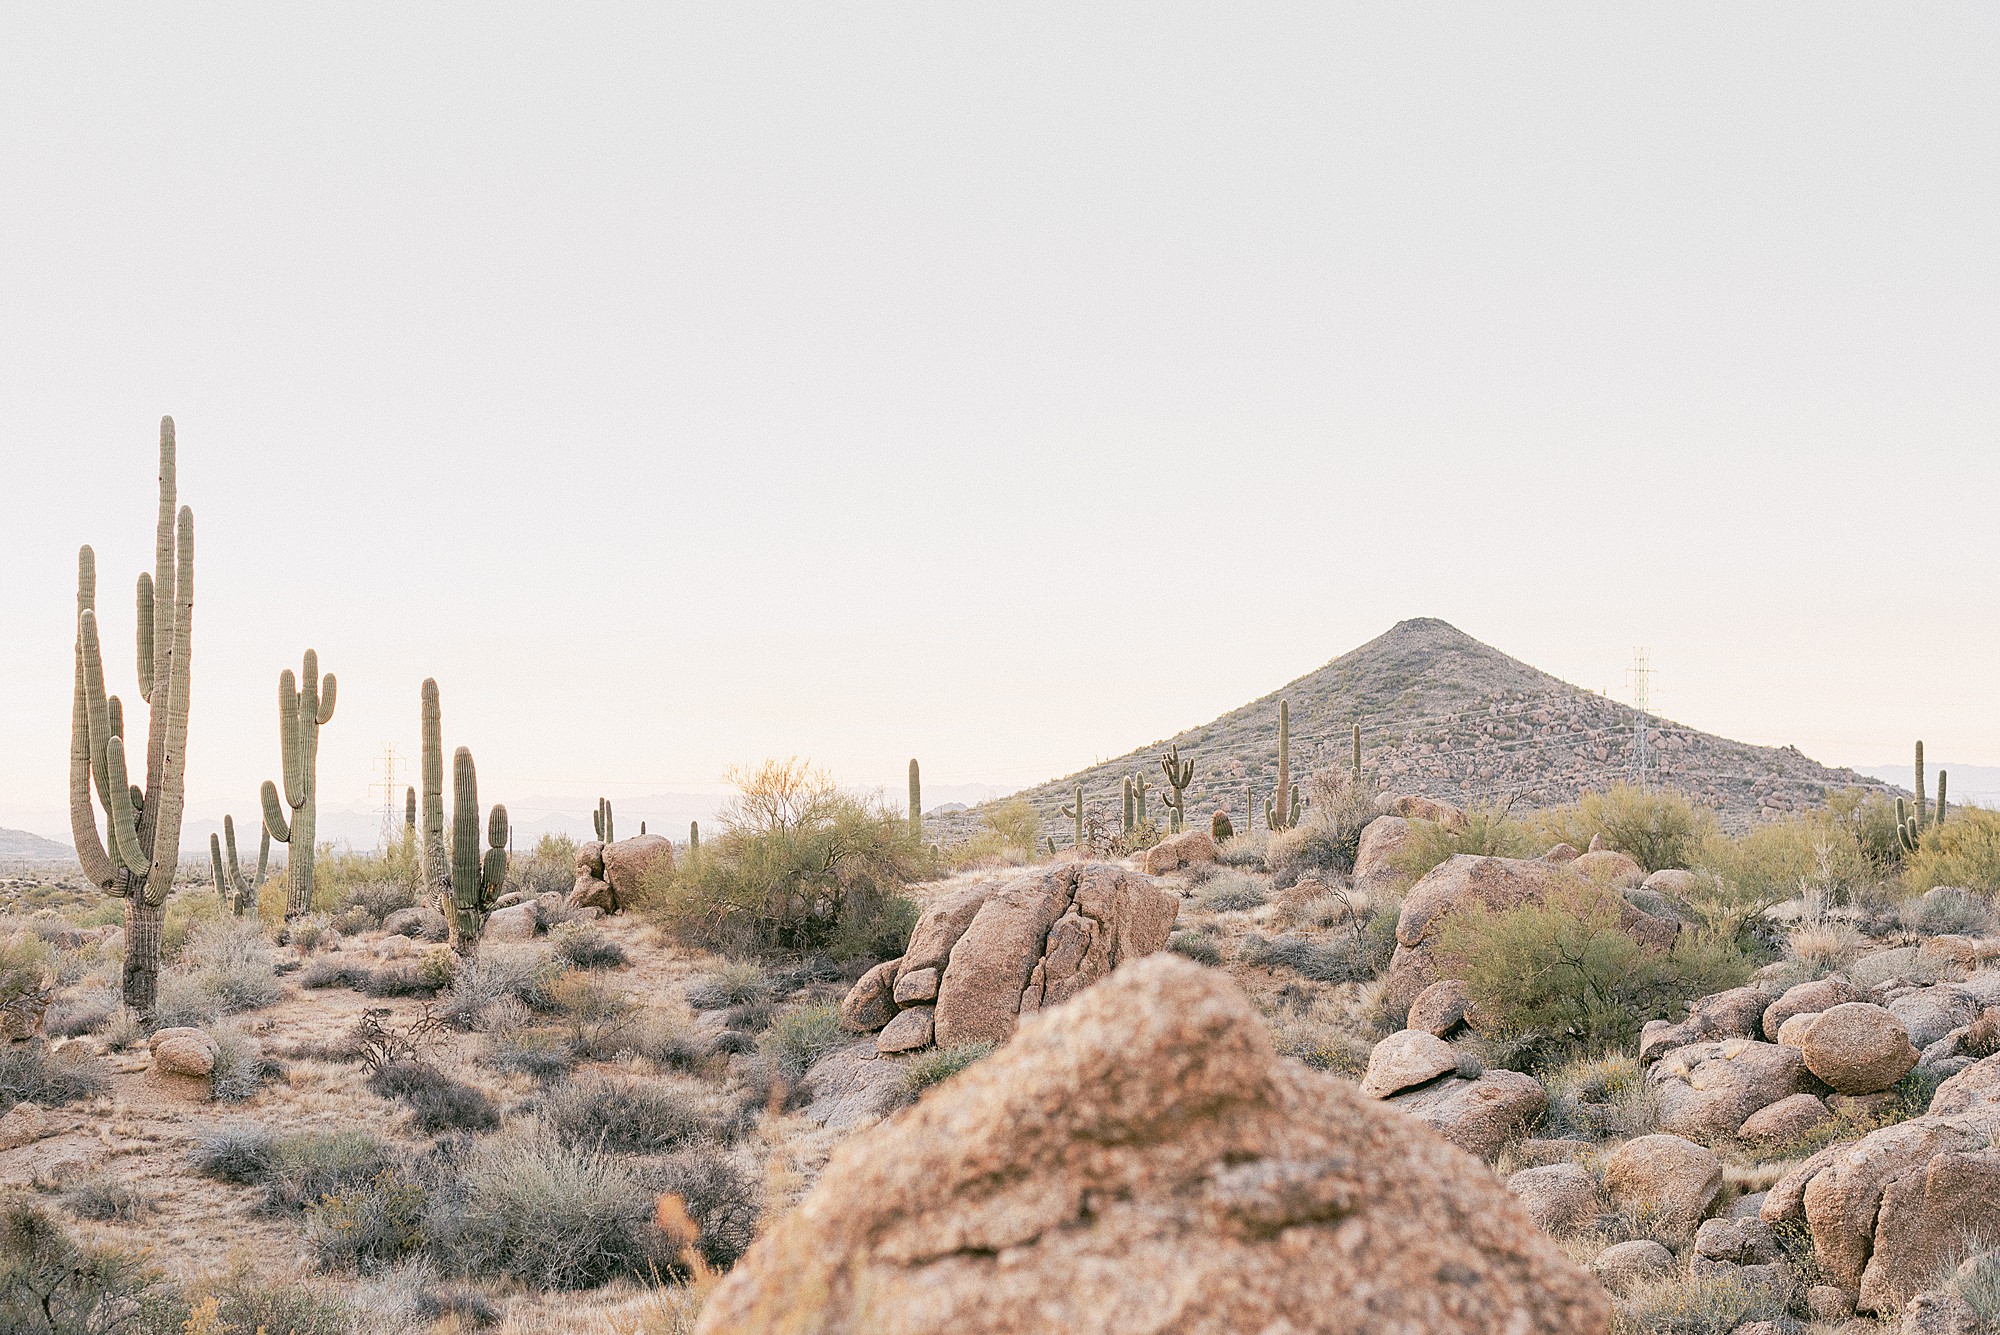 Desert landscape with saguaro cactus, boulder rocks, and mountain peak